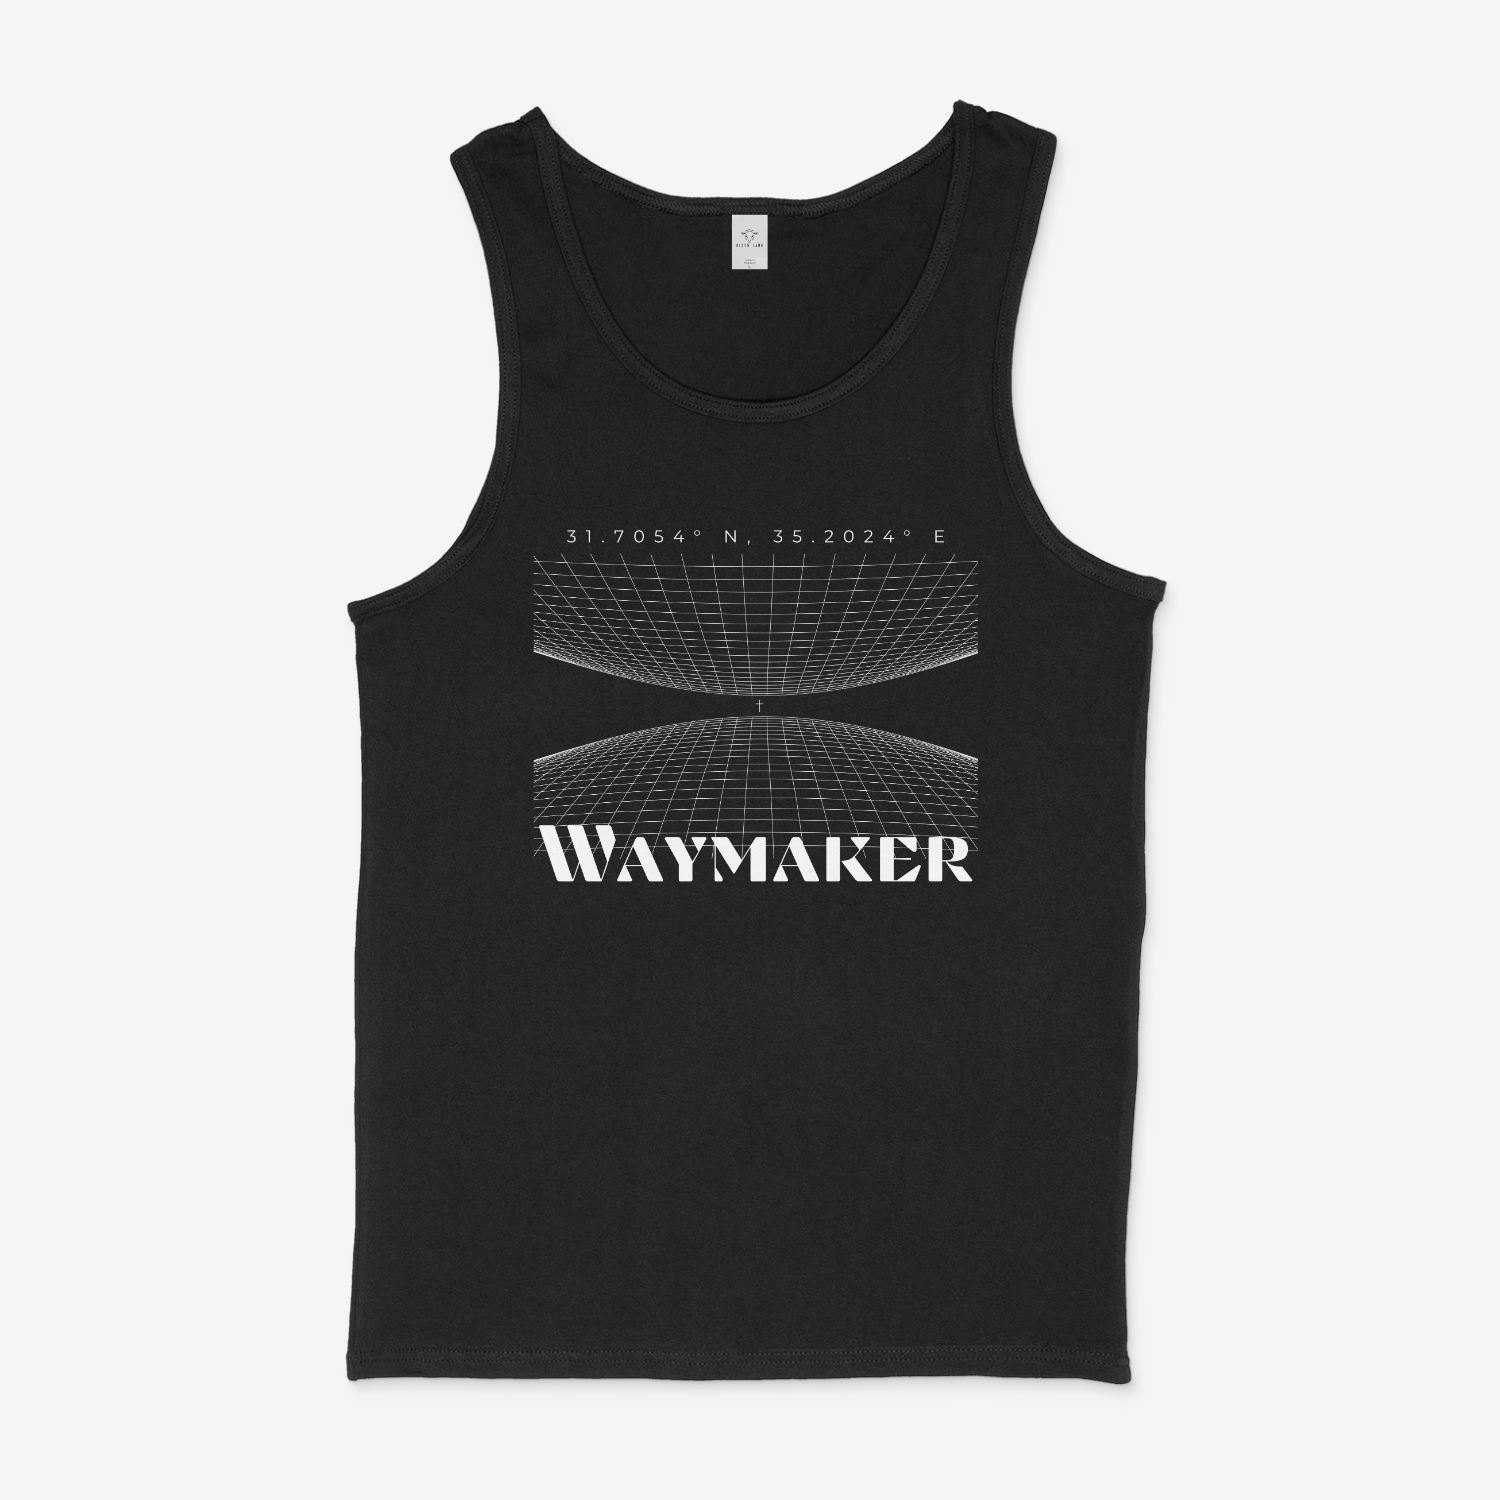 Waymaker Tank Top